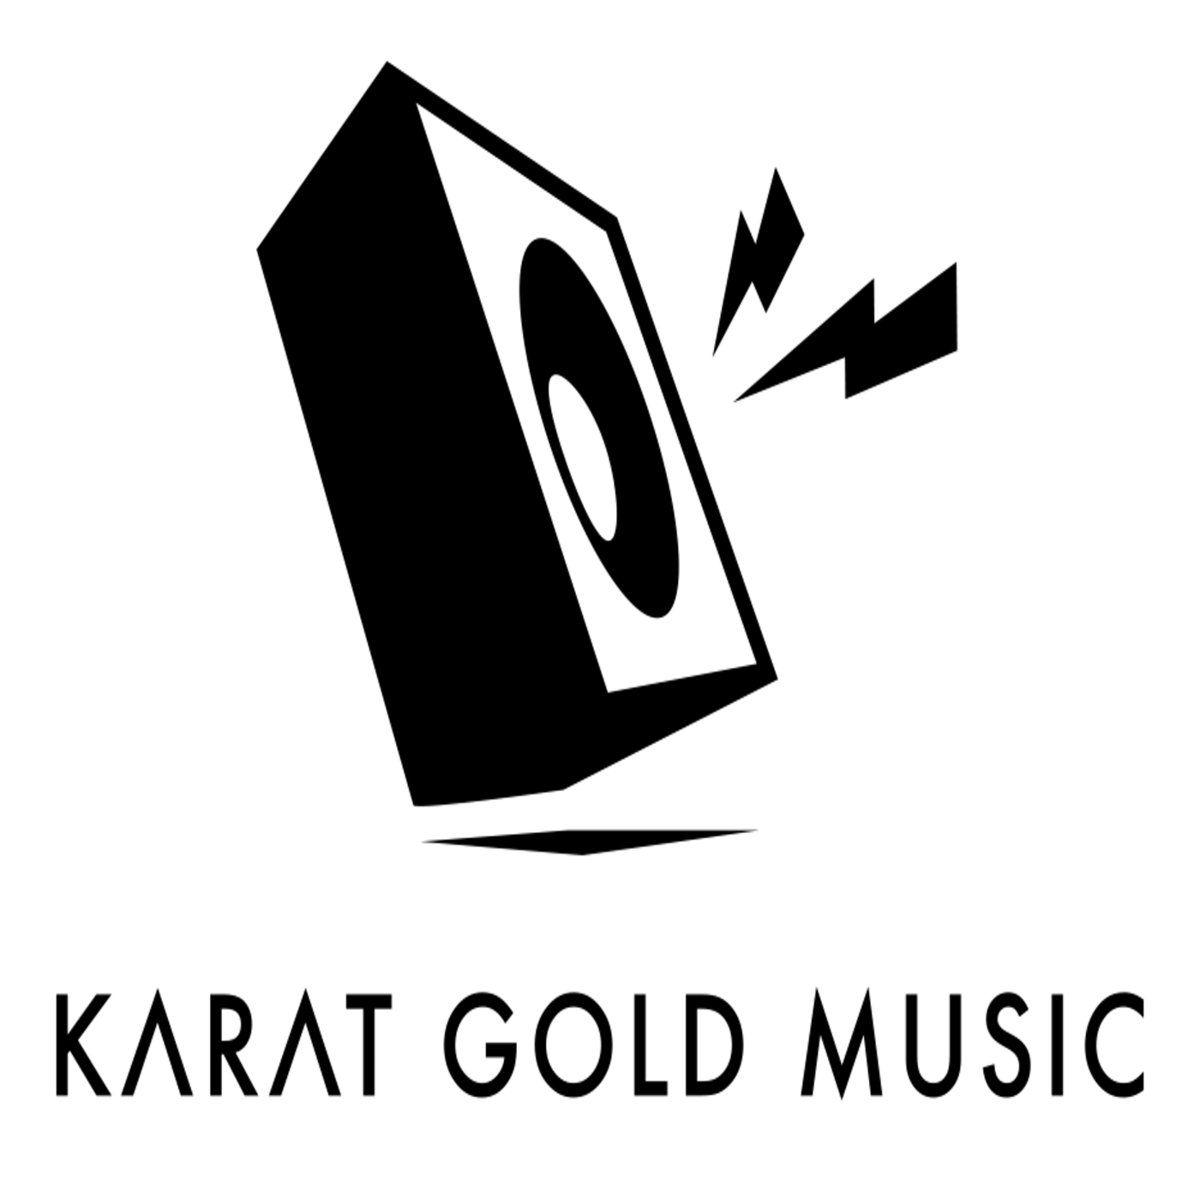 Gold Black Beats Logo - 20 Years of Beats [1996-2016] | 14KT II Karat Gold Music